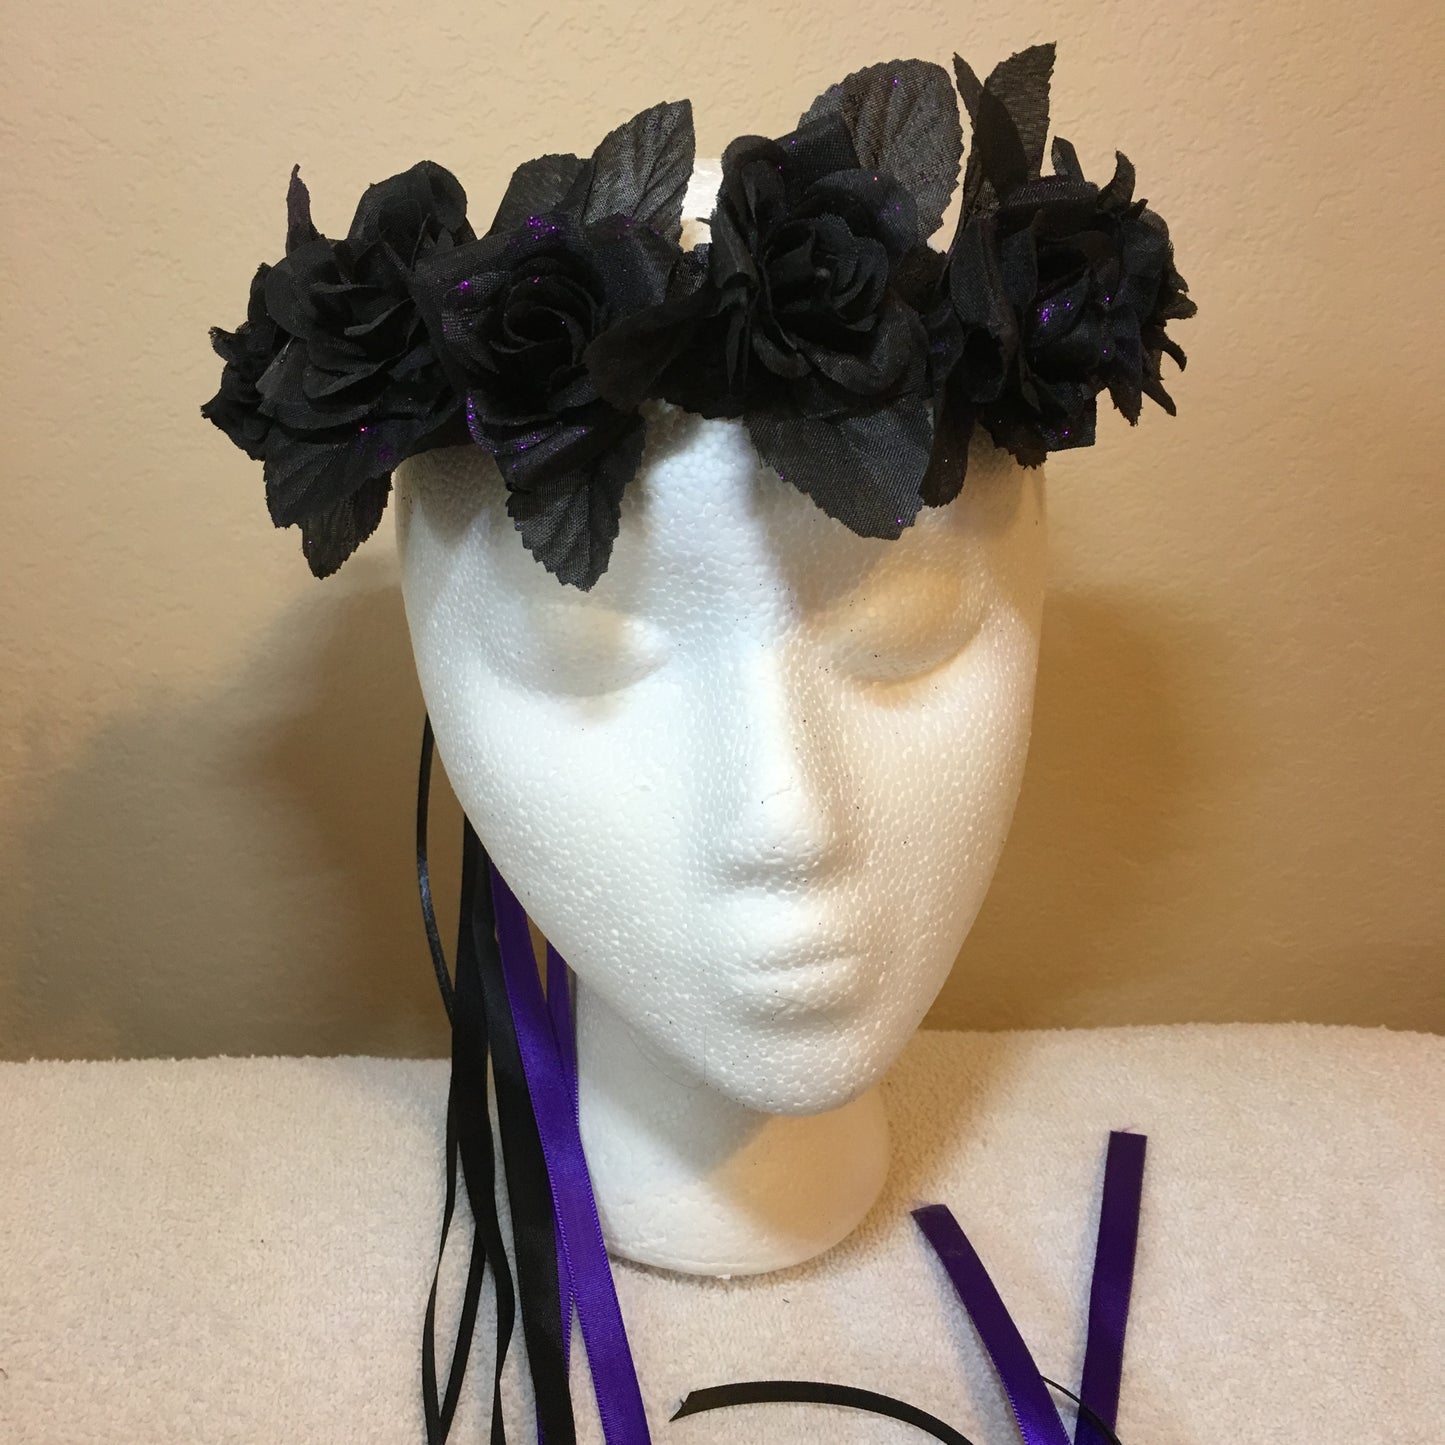 Small Wreath - All black roses w/purple sparkle